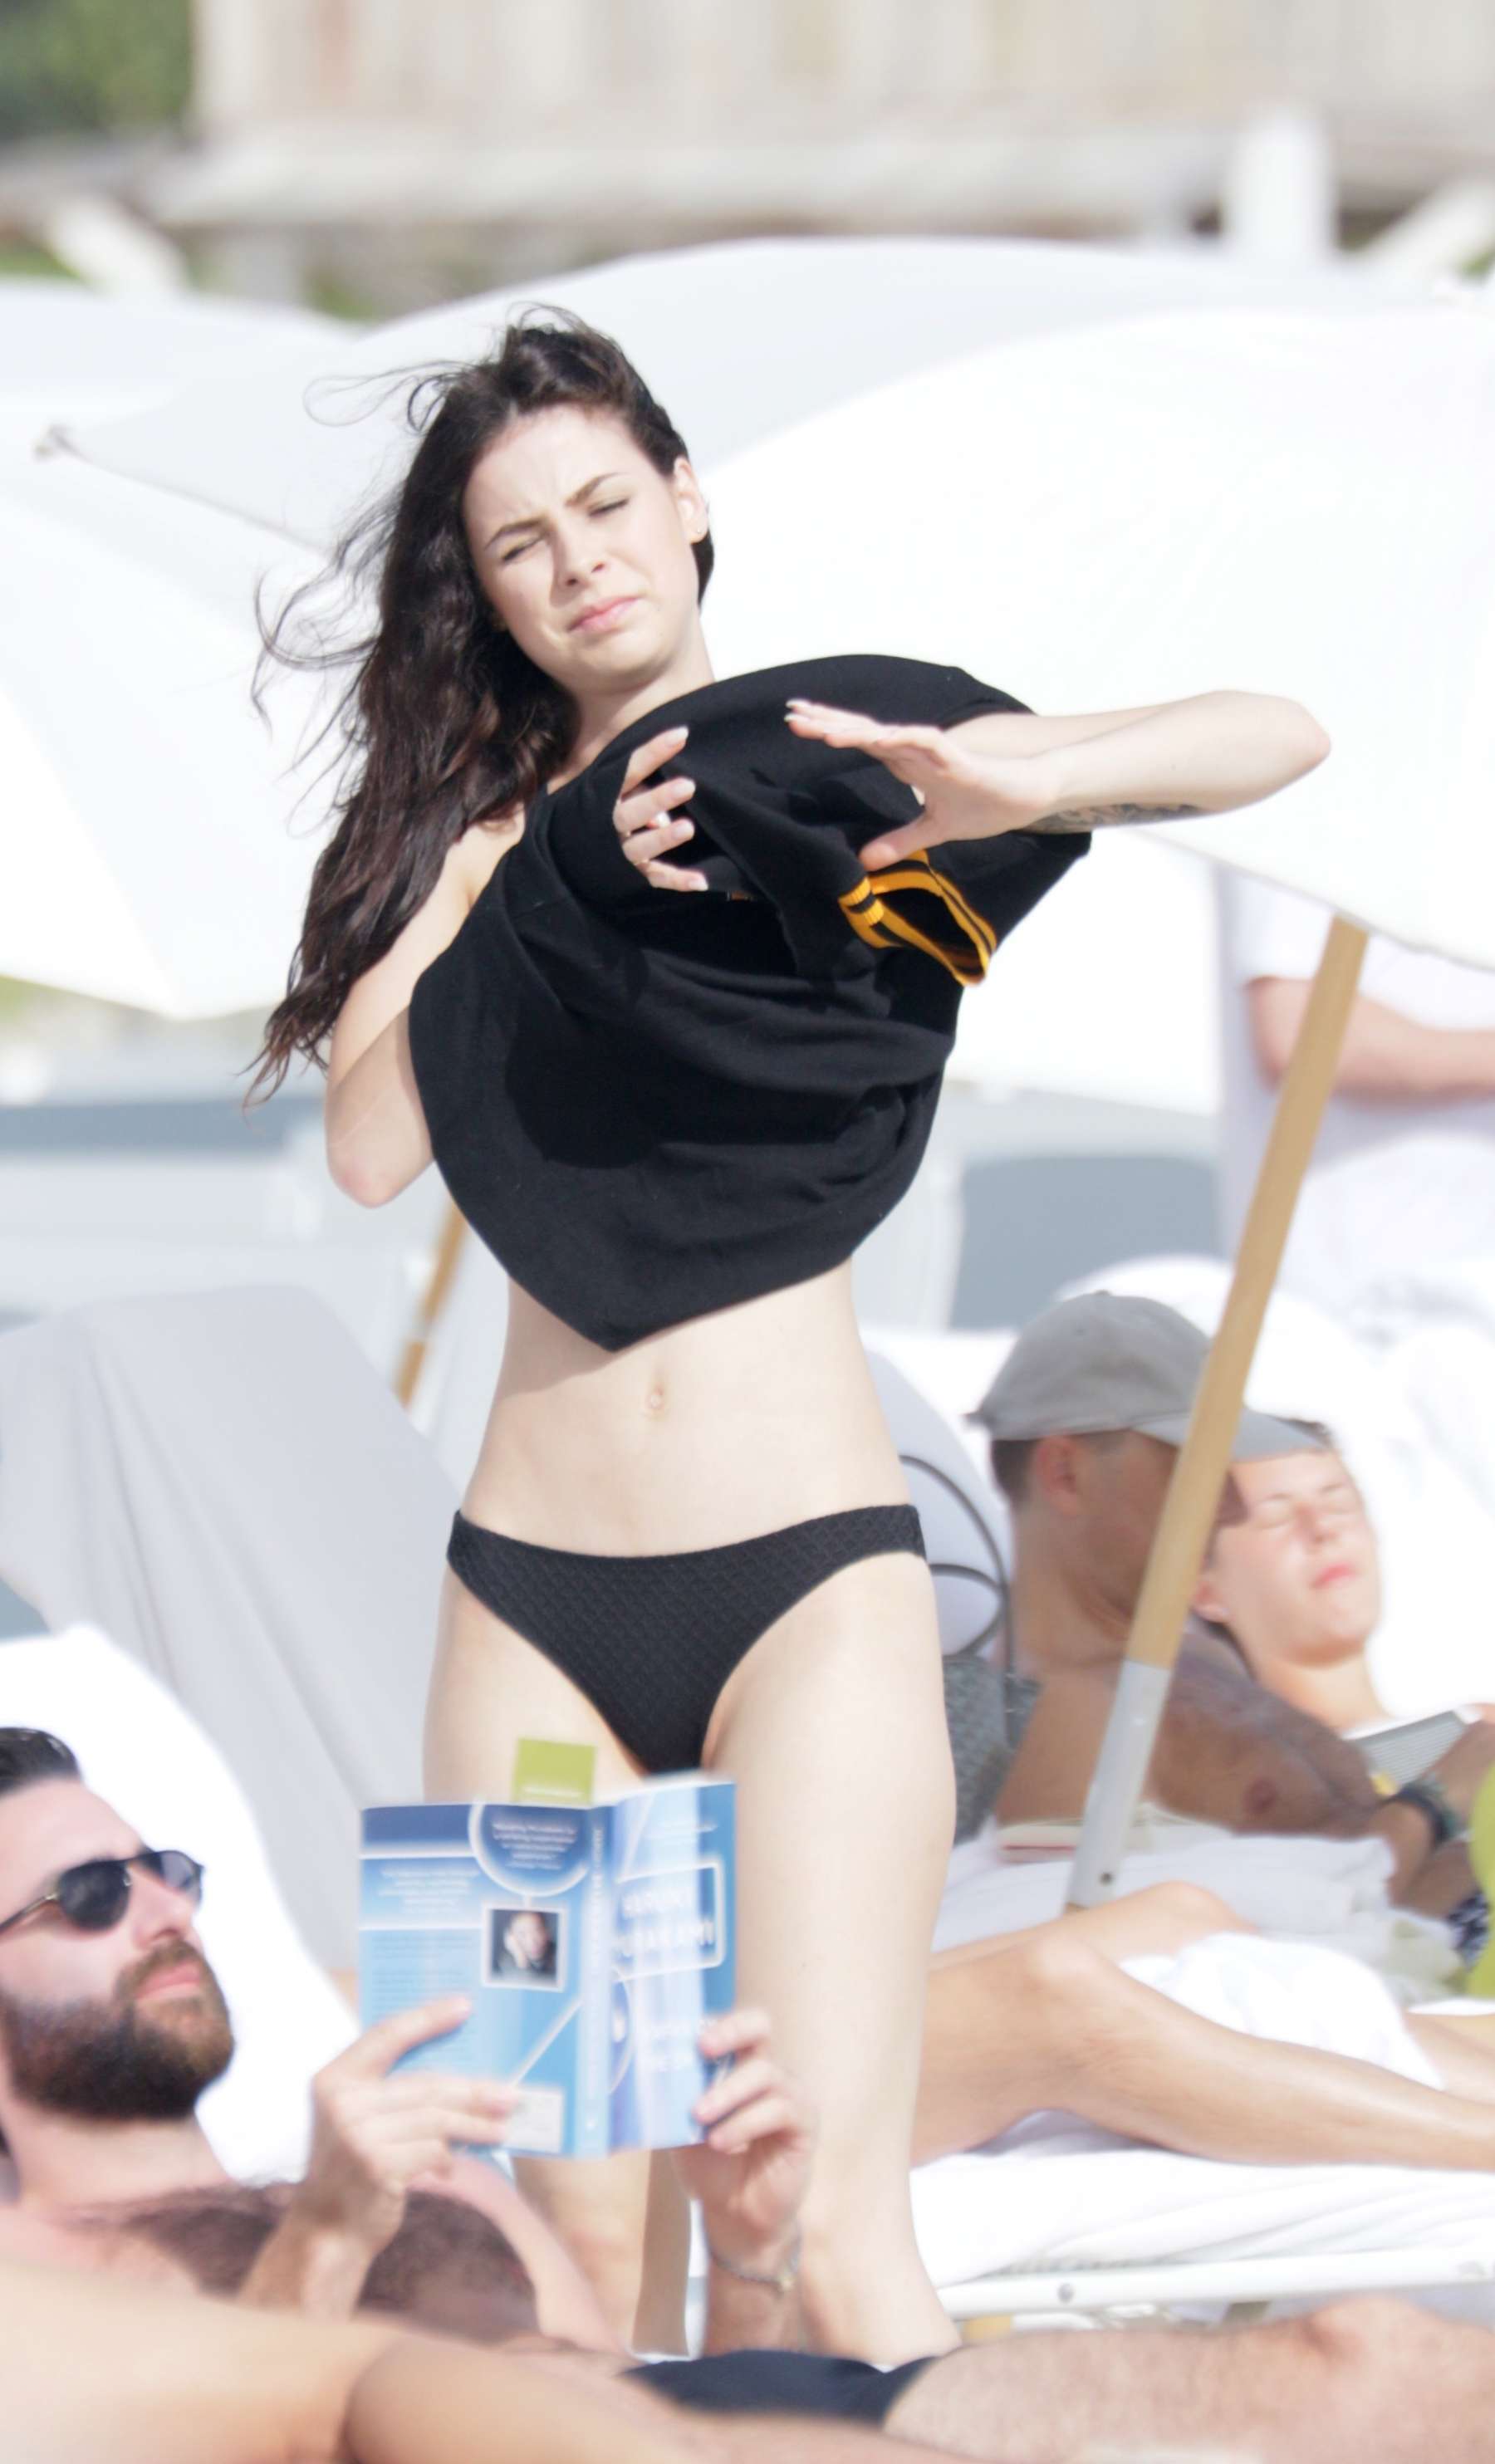 Lena Meyer Landrut Bikini Candids in Miami | Indian Girls Villa - Celebs  Beauty, Fashion and Entertainment